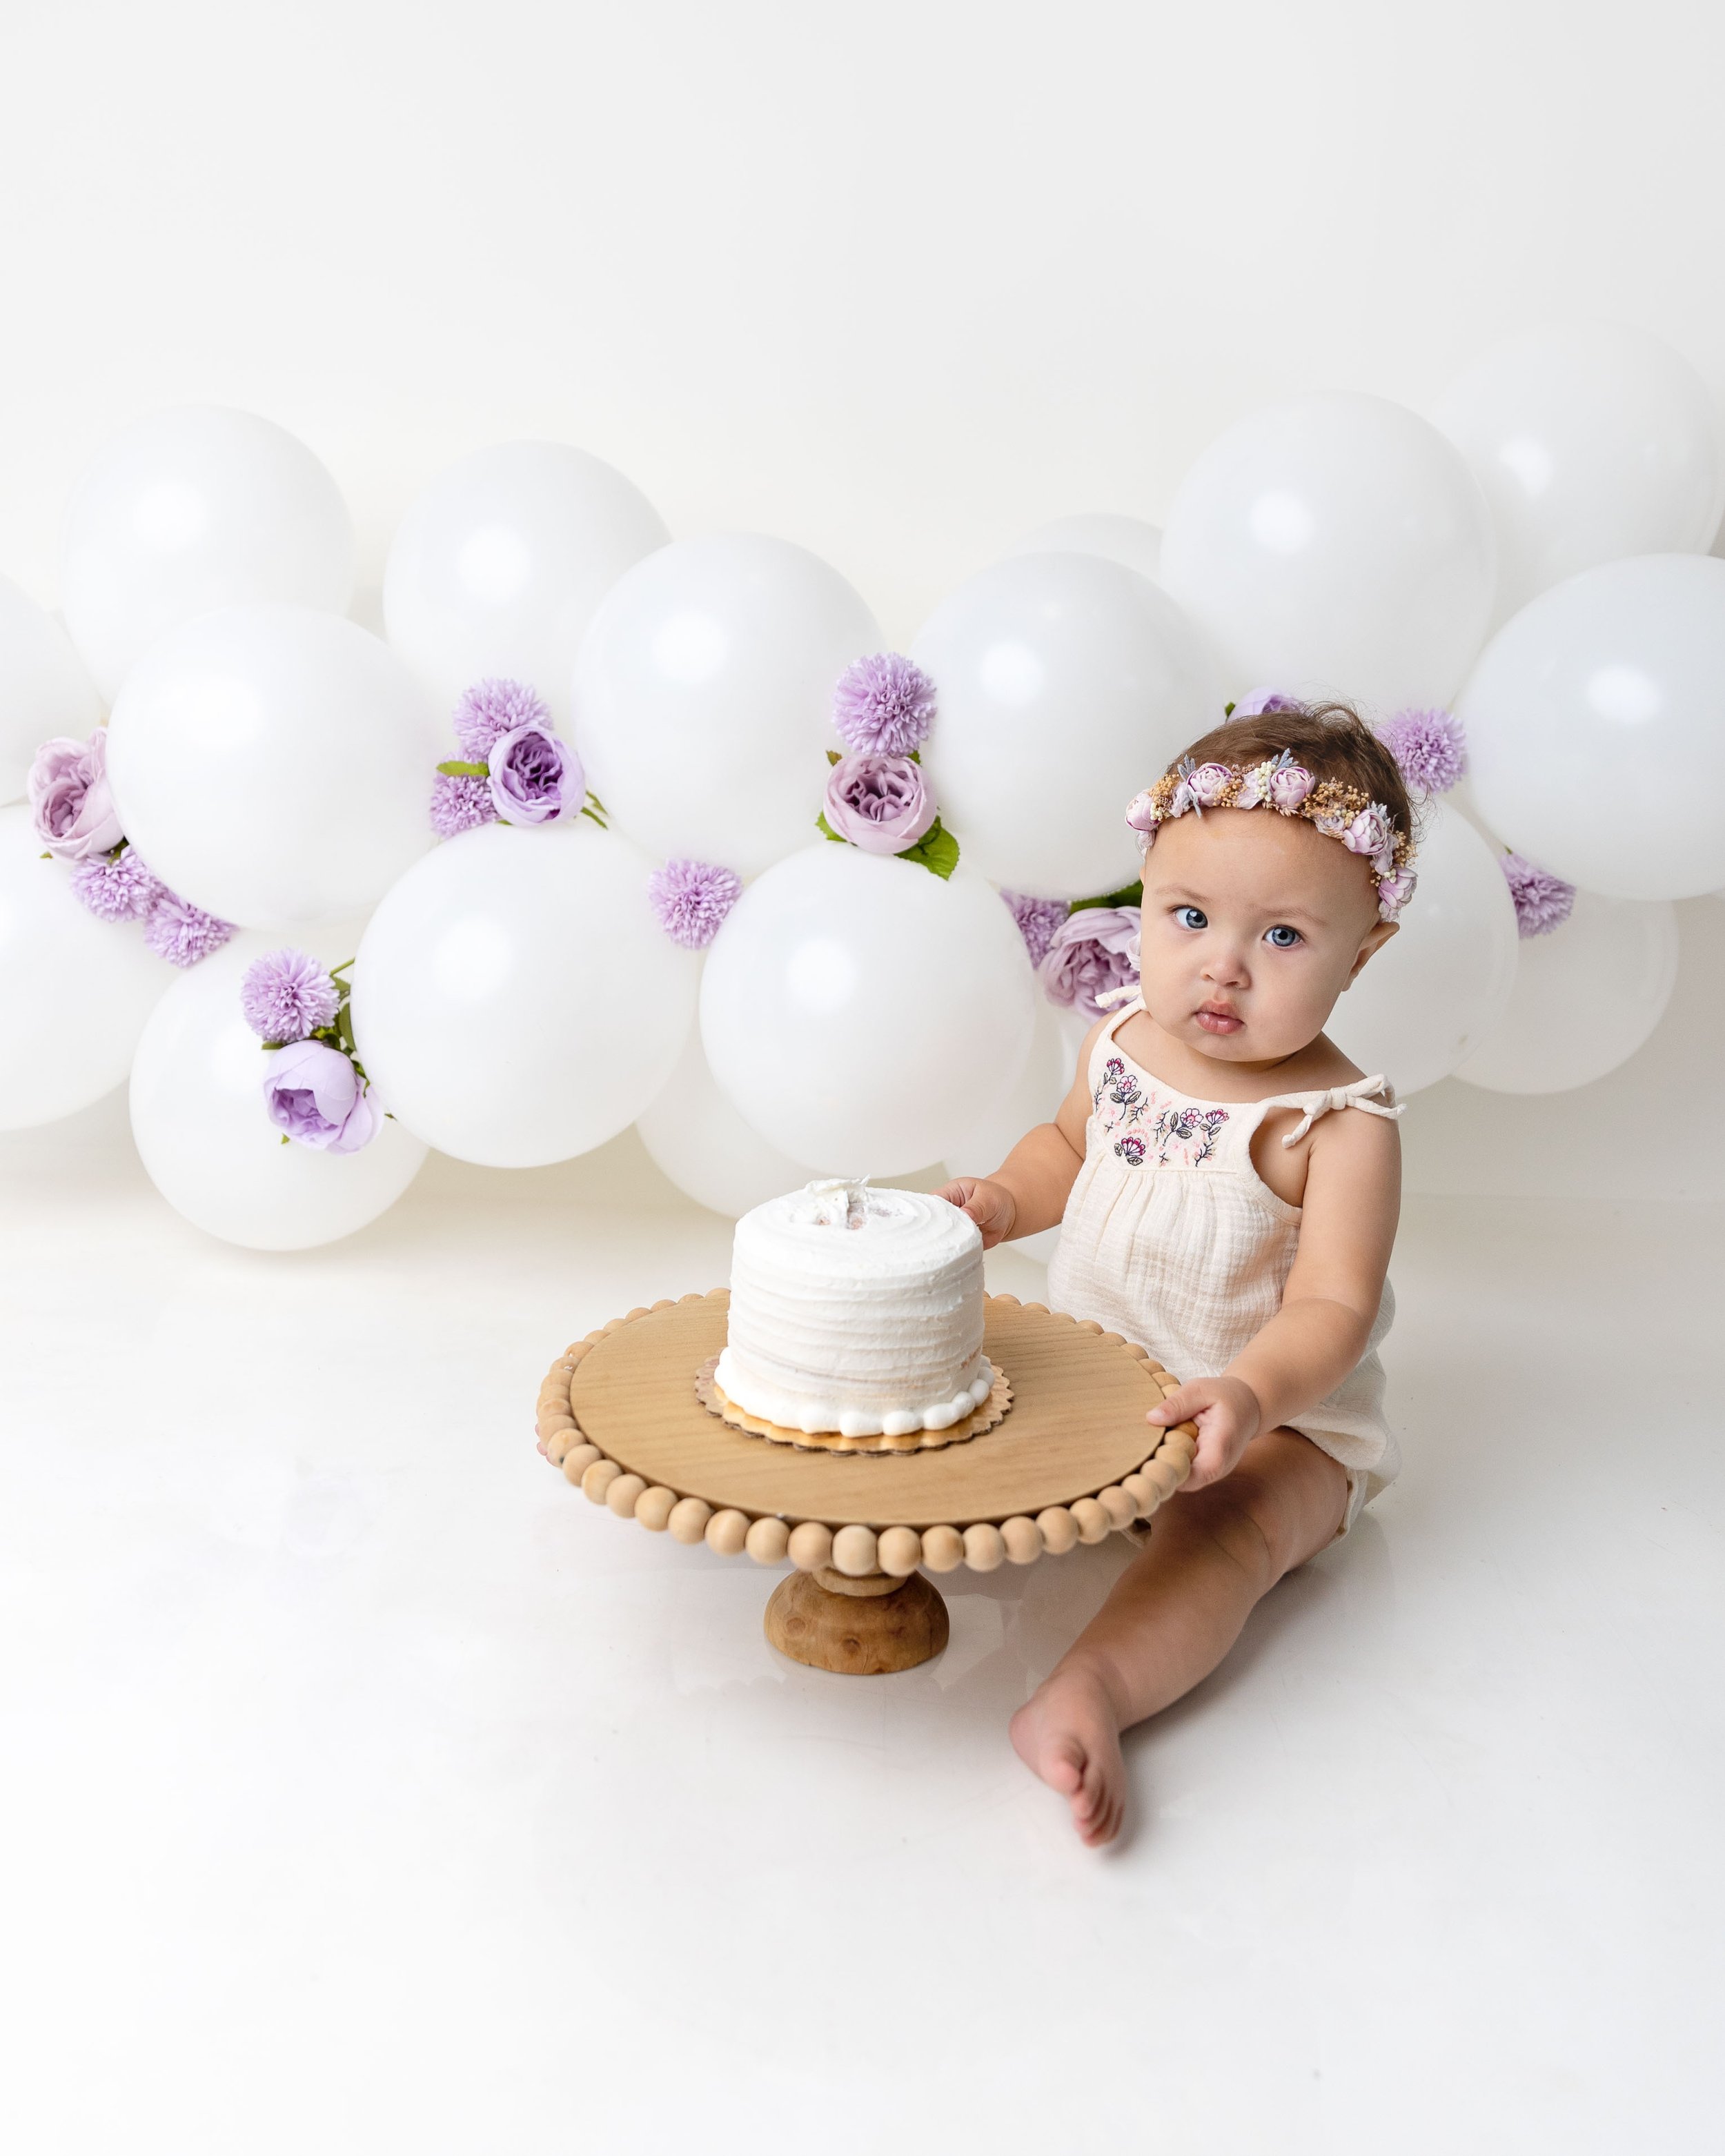 cake-smash-images-first-birthday-photography-baby-images-newborn-photography-spokane-washington-7.jpg